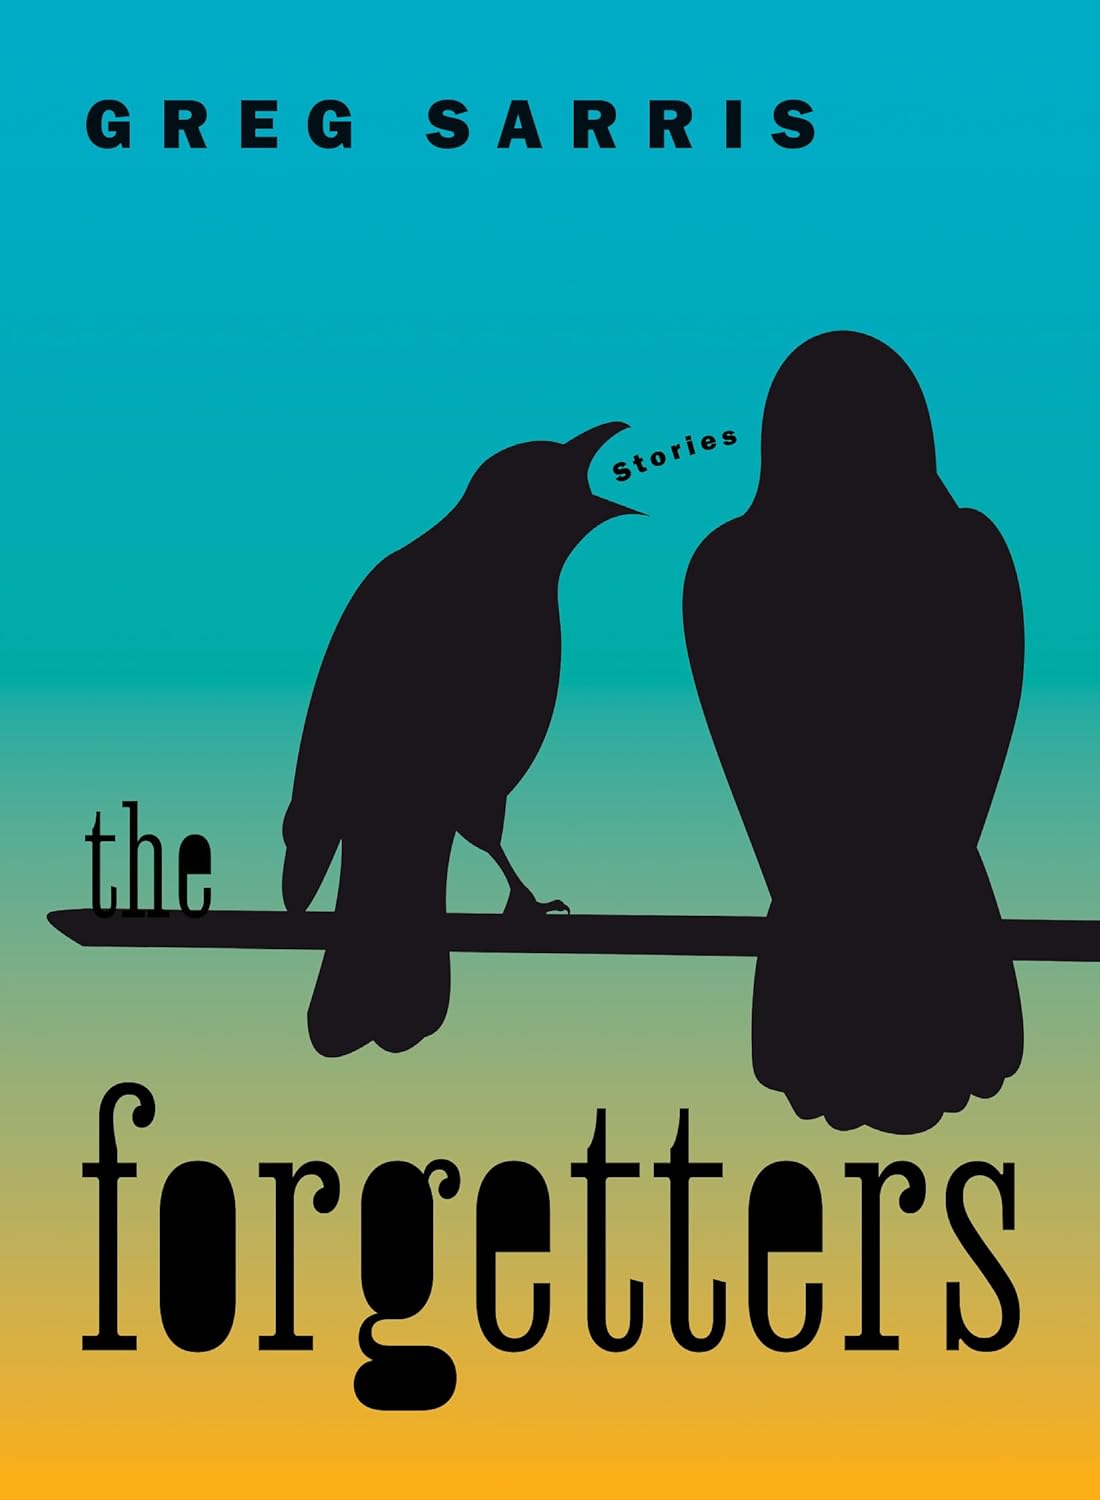 Greg Sarris Book Cover Image